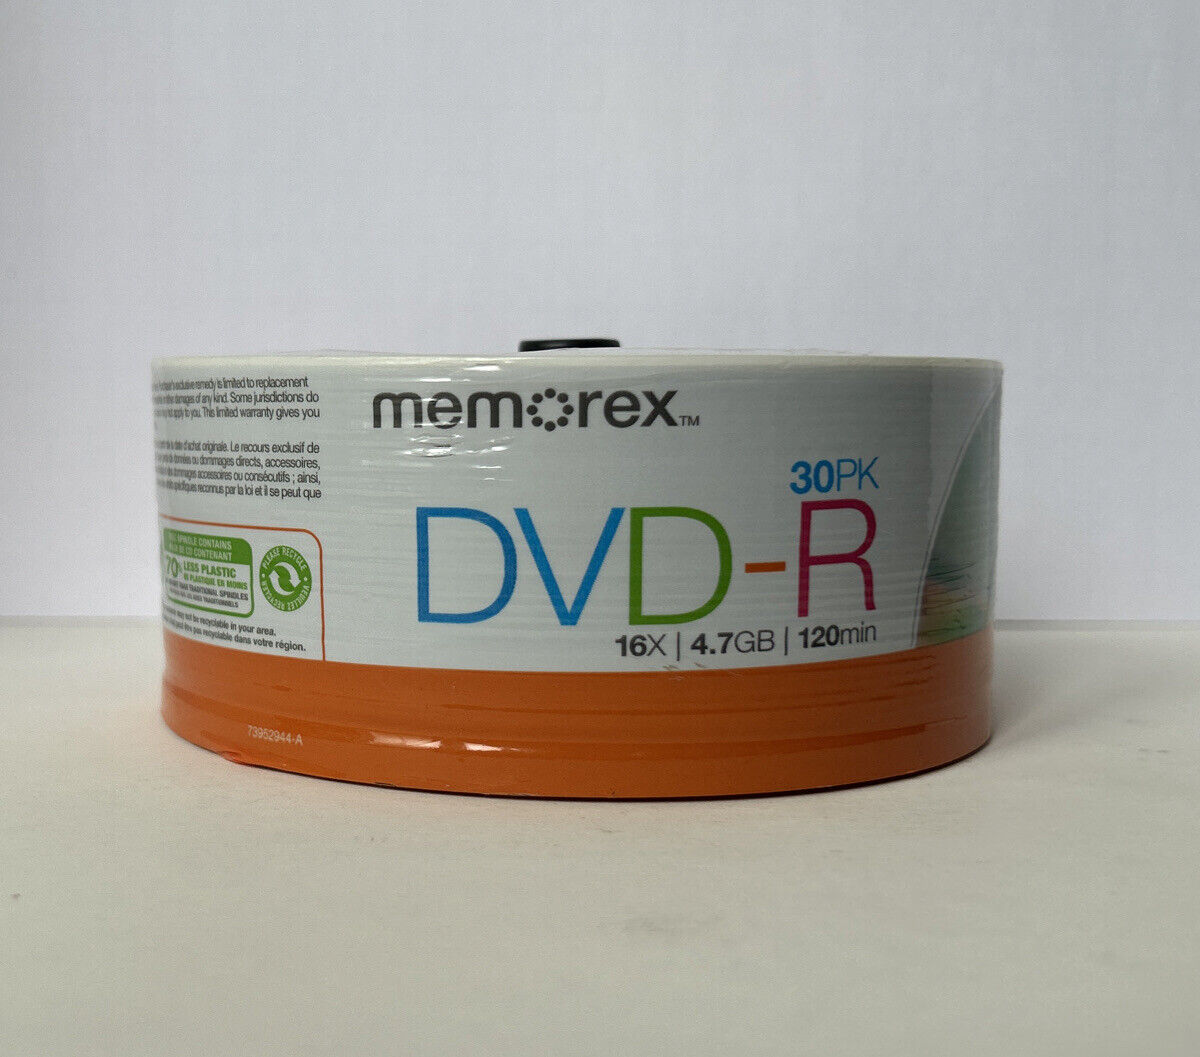 Memorex DVD-R 30 Pack 30PK Spindle 16x, 4.7 Gb, 120 Minutes Brand New Sealed